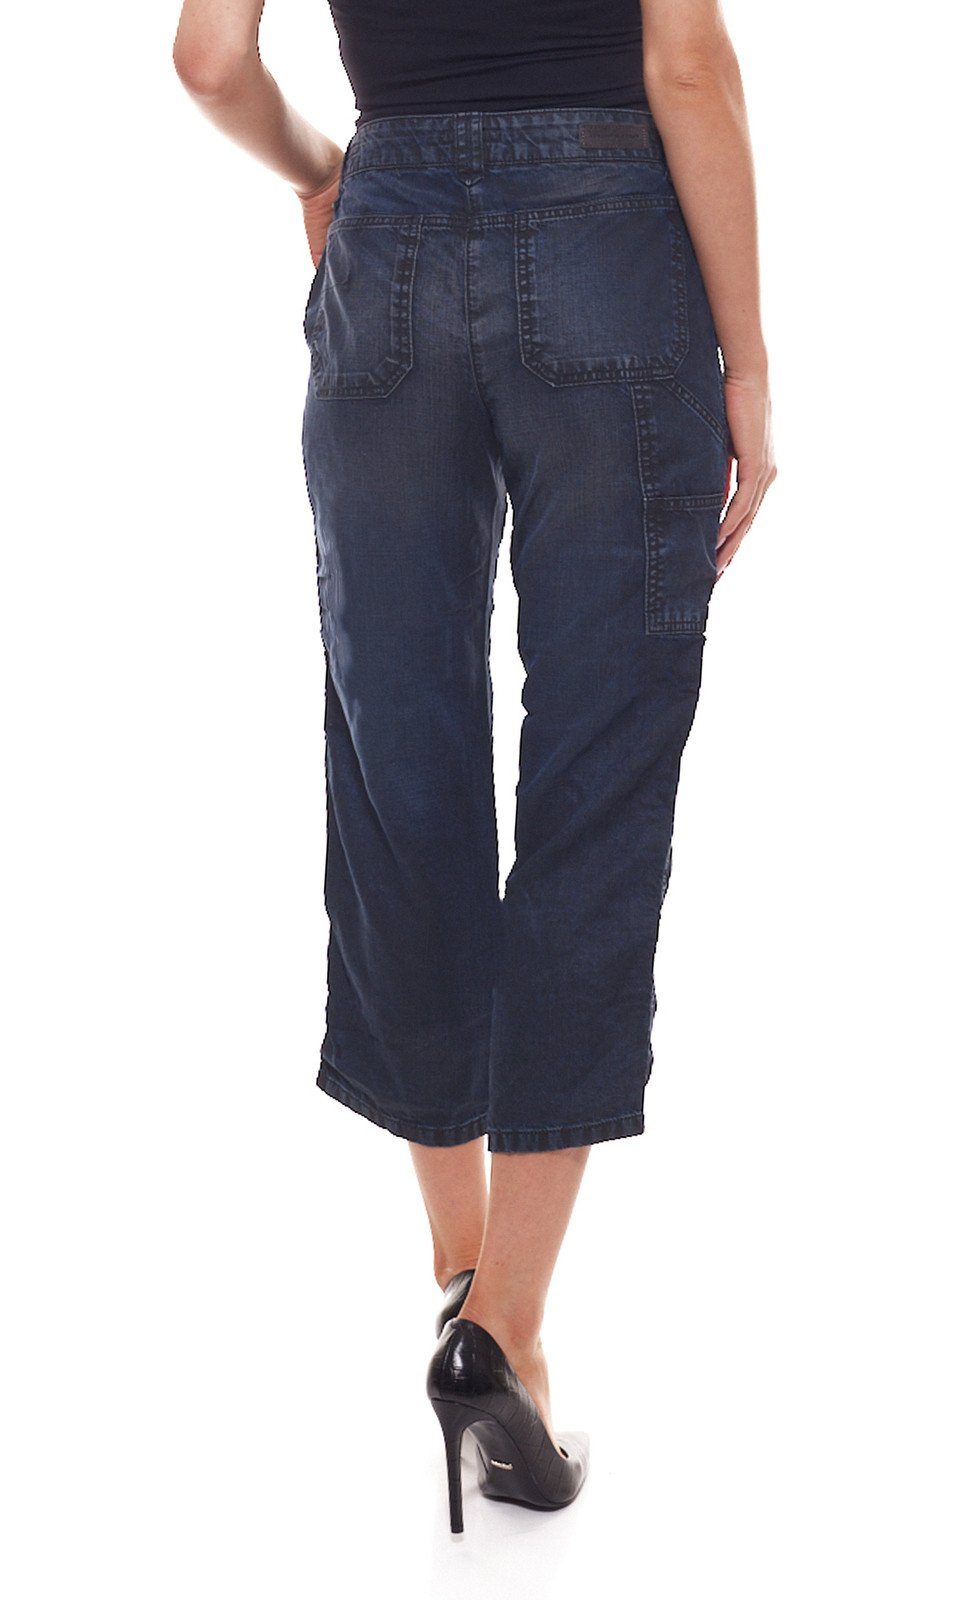 OPUS Caprihose OPUS Melva im Blau Denim-Look und Five-Pocket-Style Alltags-Jeans modische Capri-Hose Jeans Damen